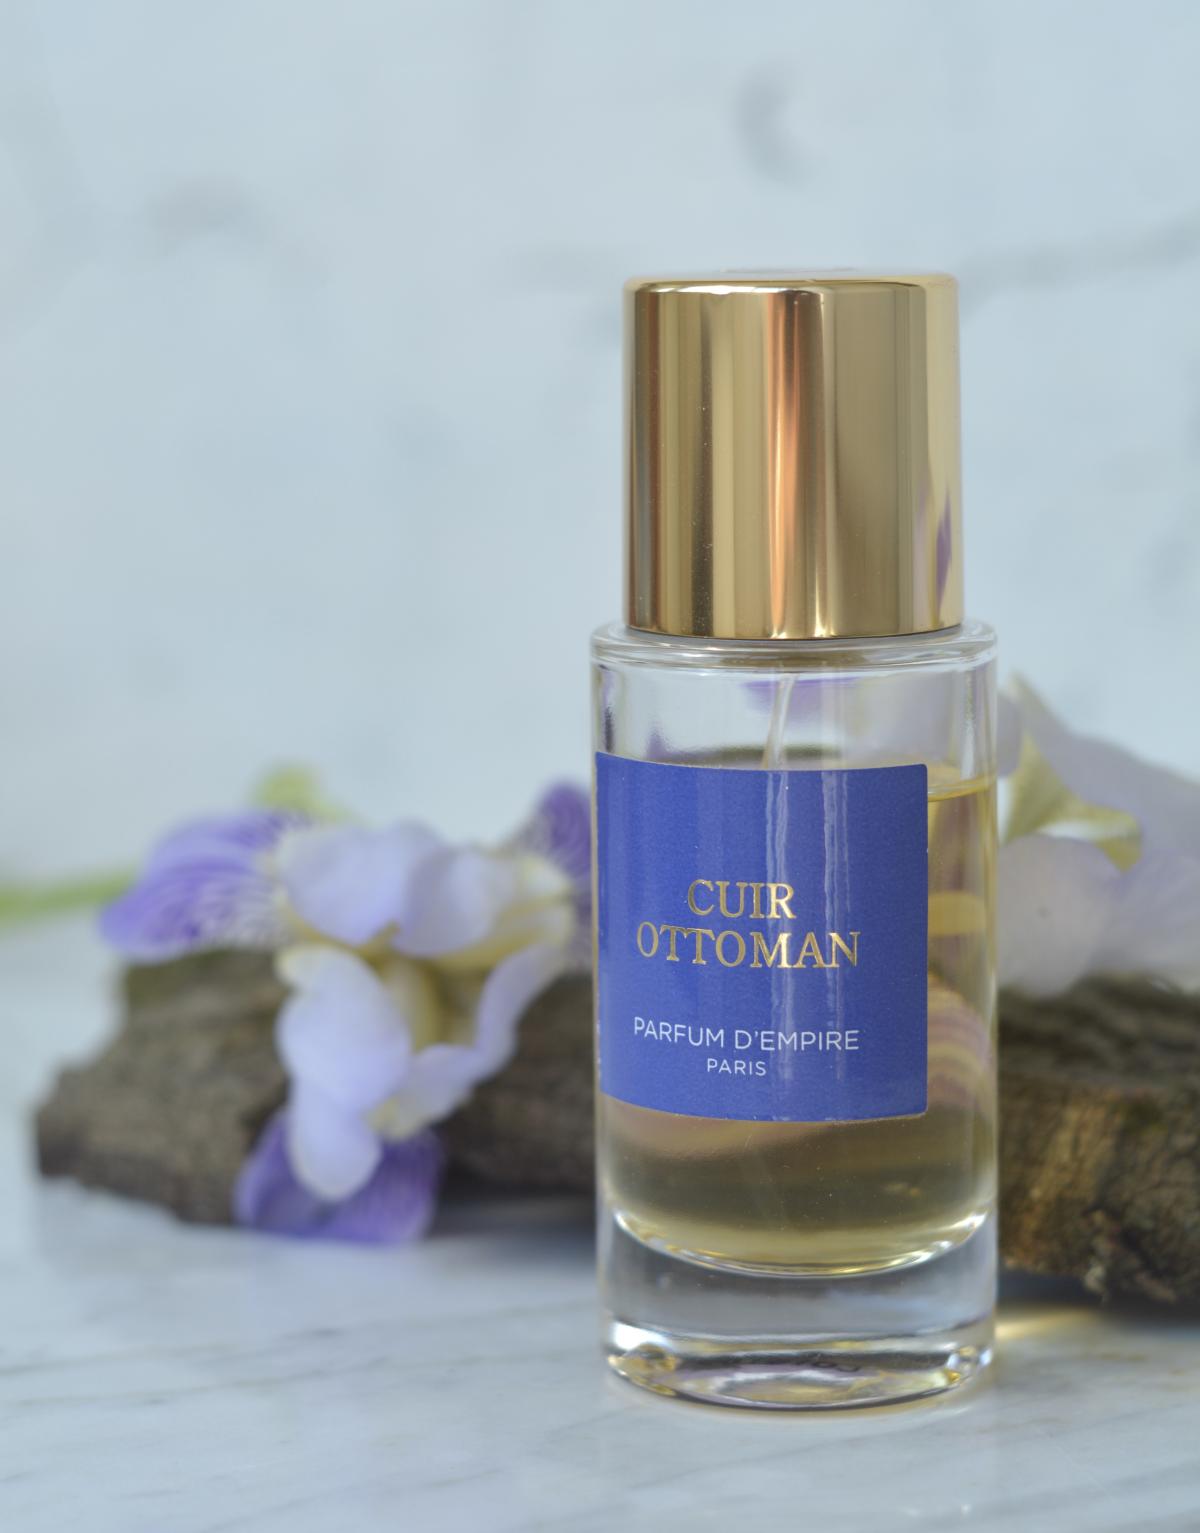 Cuir Ottoman Parfum d'Empire perfume - a fragrance for women and men 2006